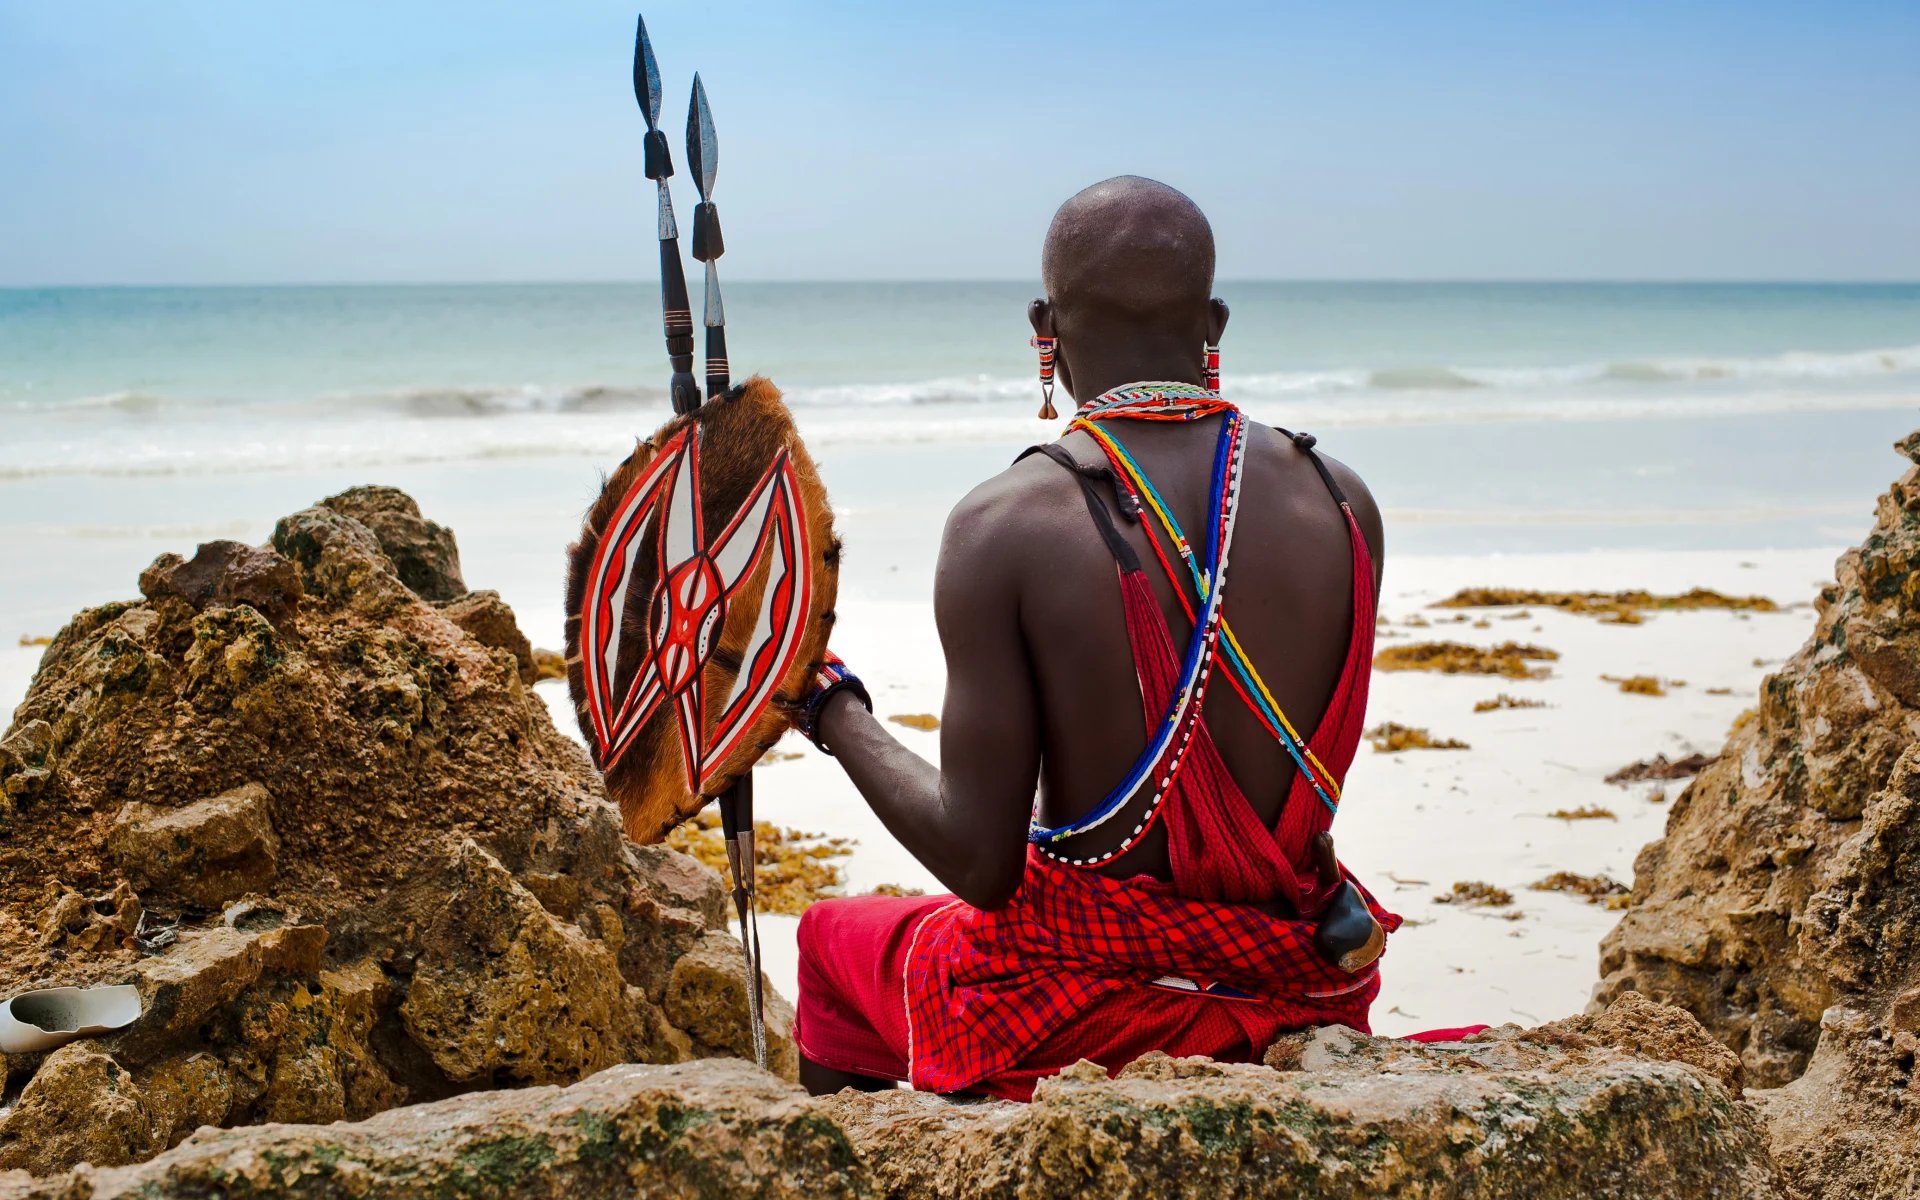 A Maasai Warrior sits on Diani Beach and admires the ocean view.